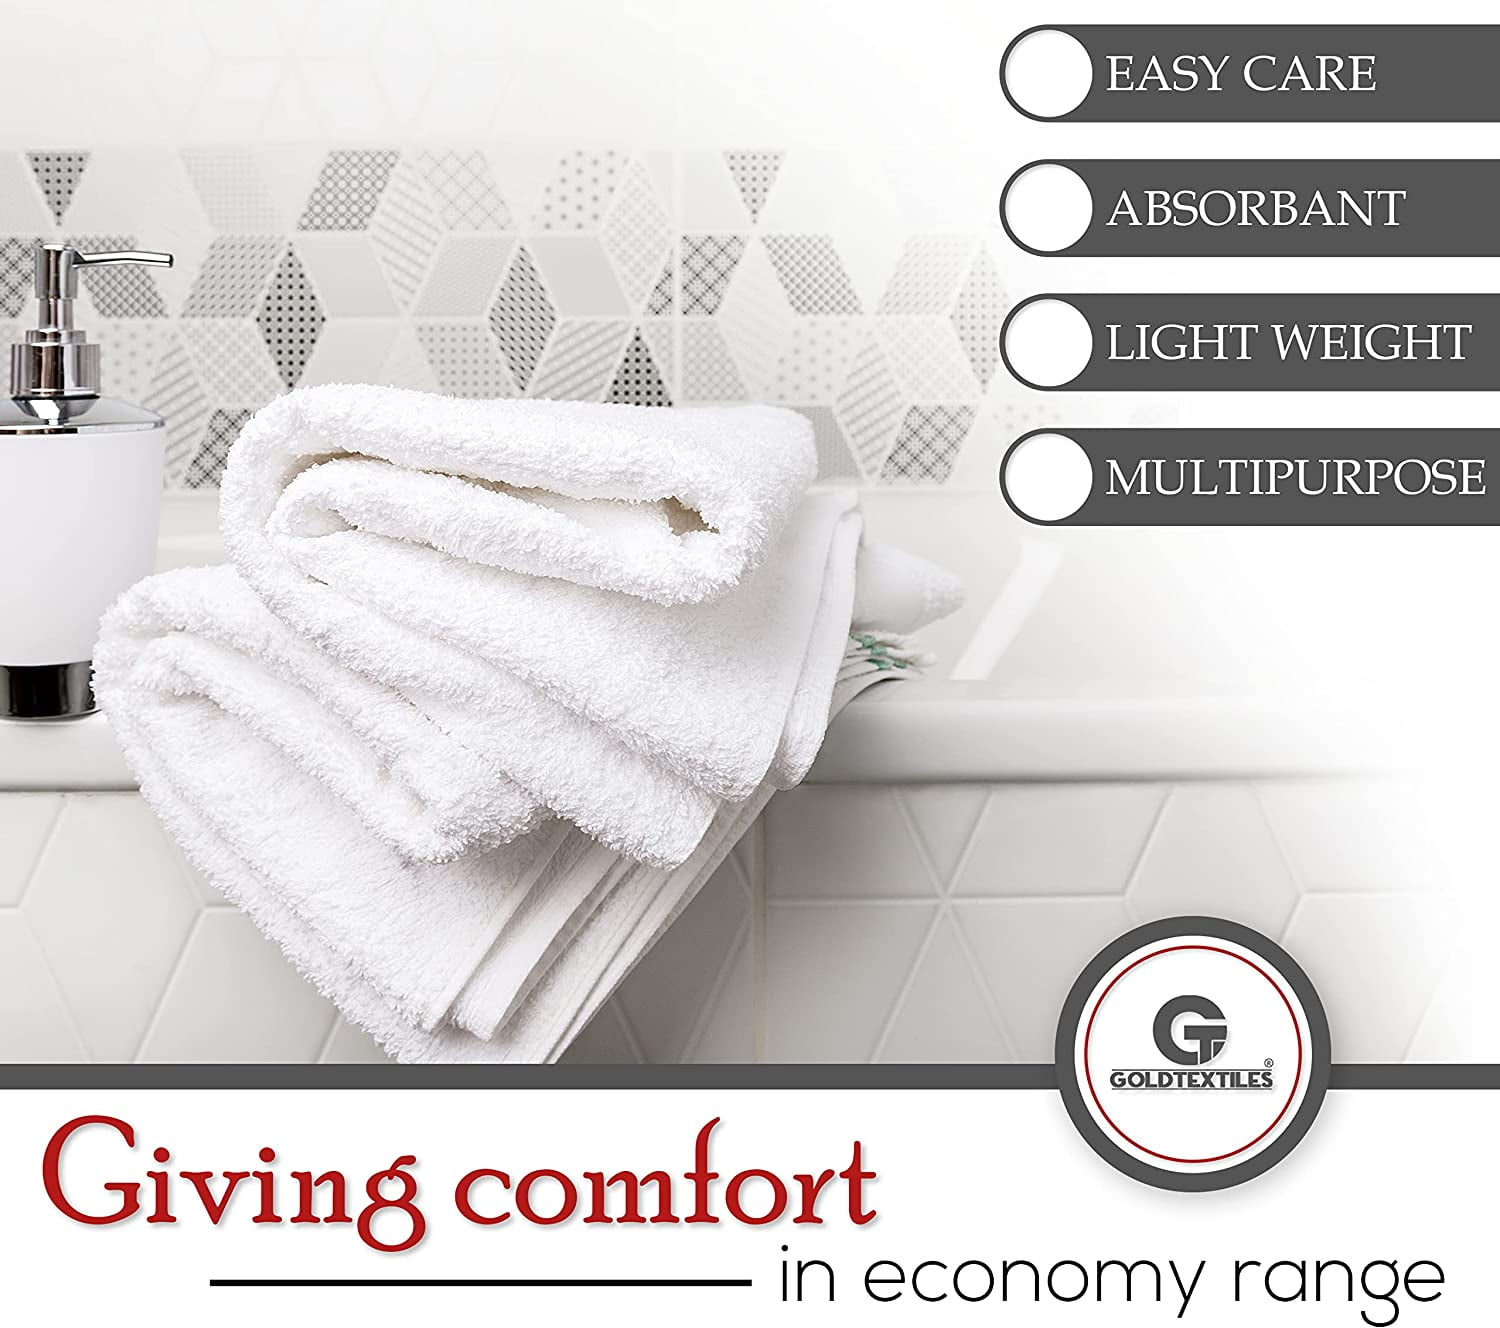 Bath Towels 20x40 4.00 lb Wt, 100% Cotton Economy 10's cheaper HOTEL/Motel  White, open end yarn. Starting at $8.99/Dozen